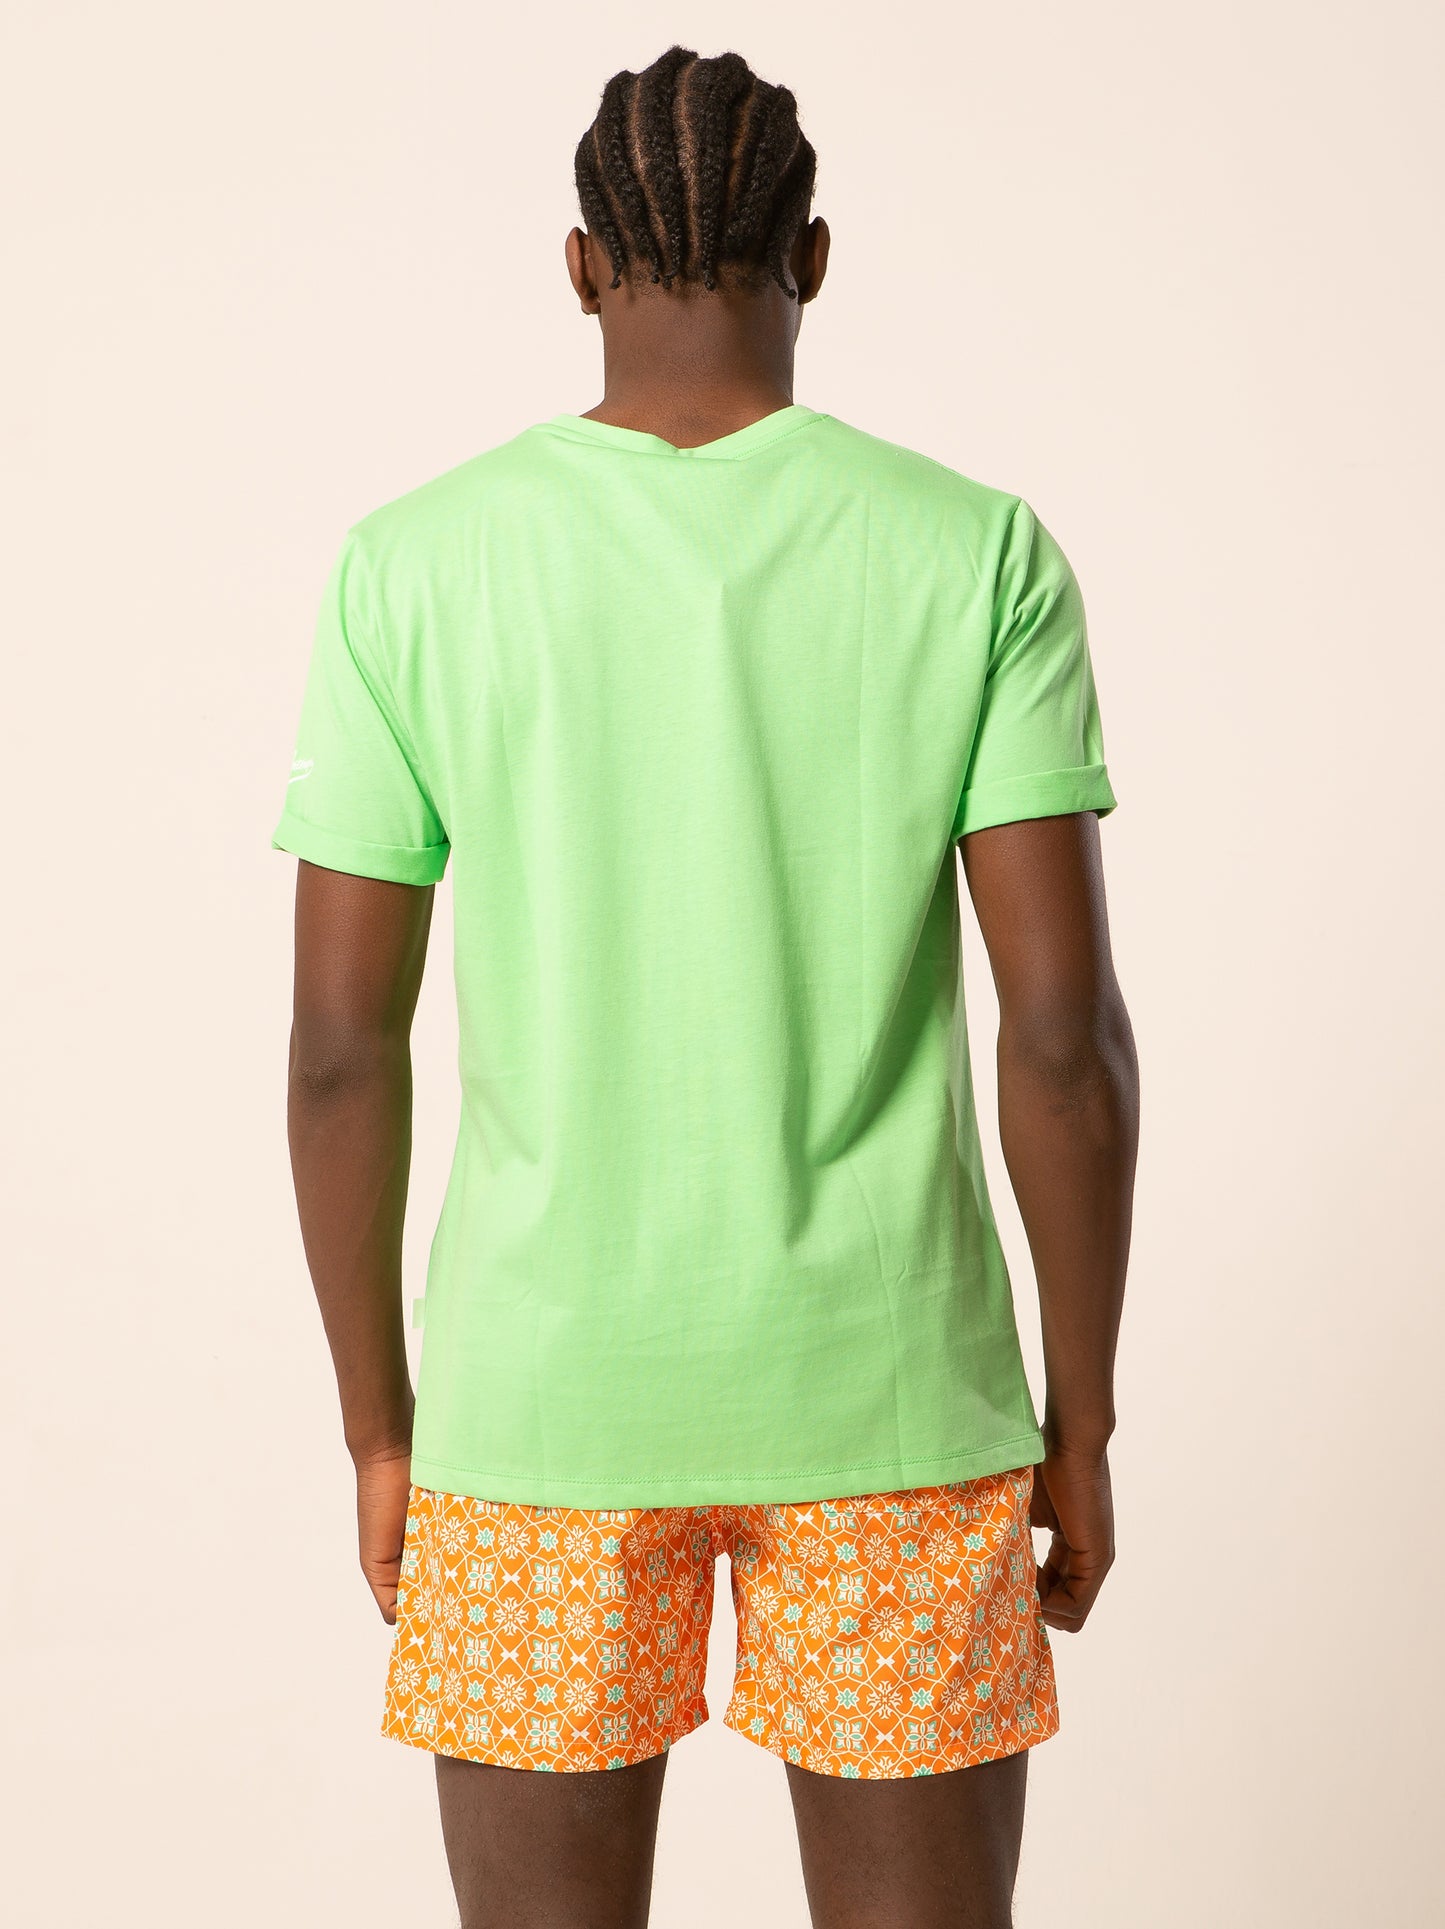 Noto - T-shirt verde fantasia maiolica